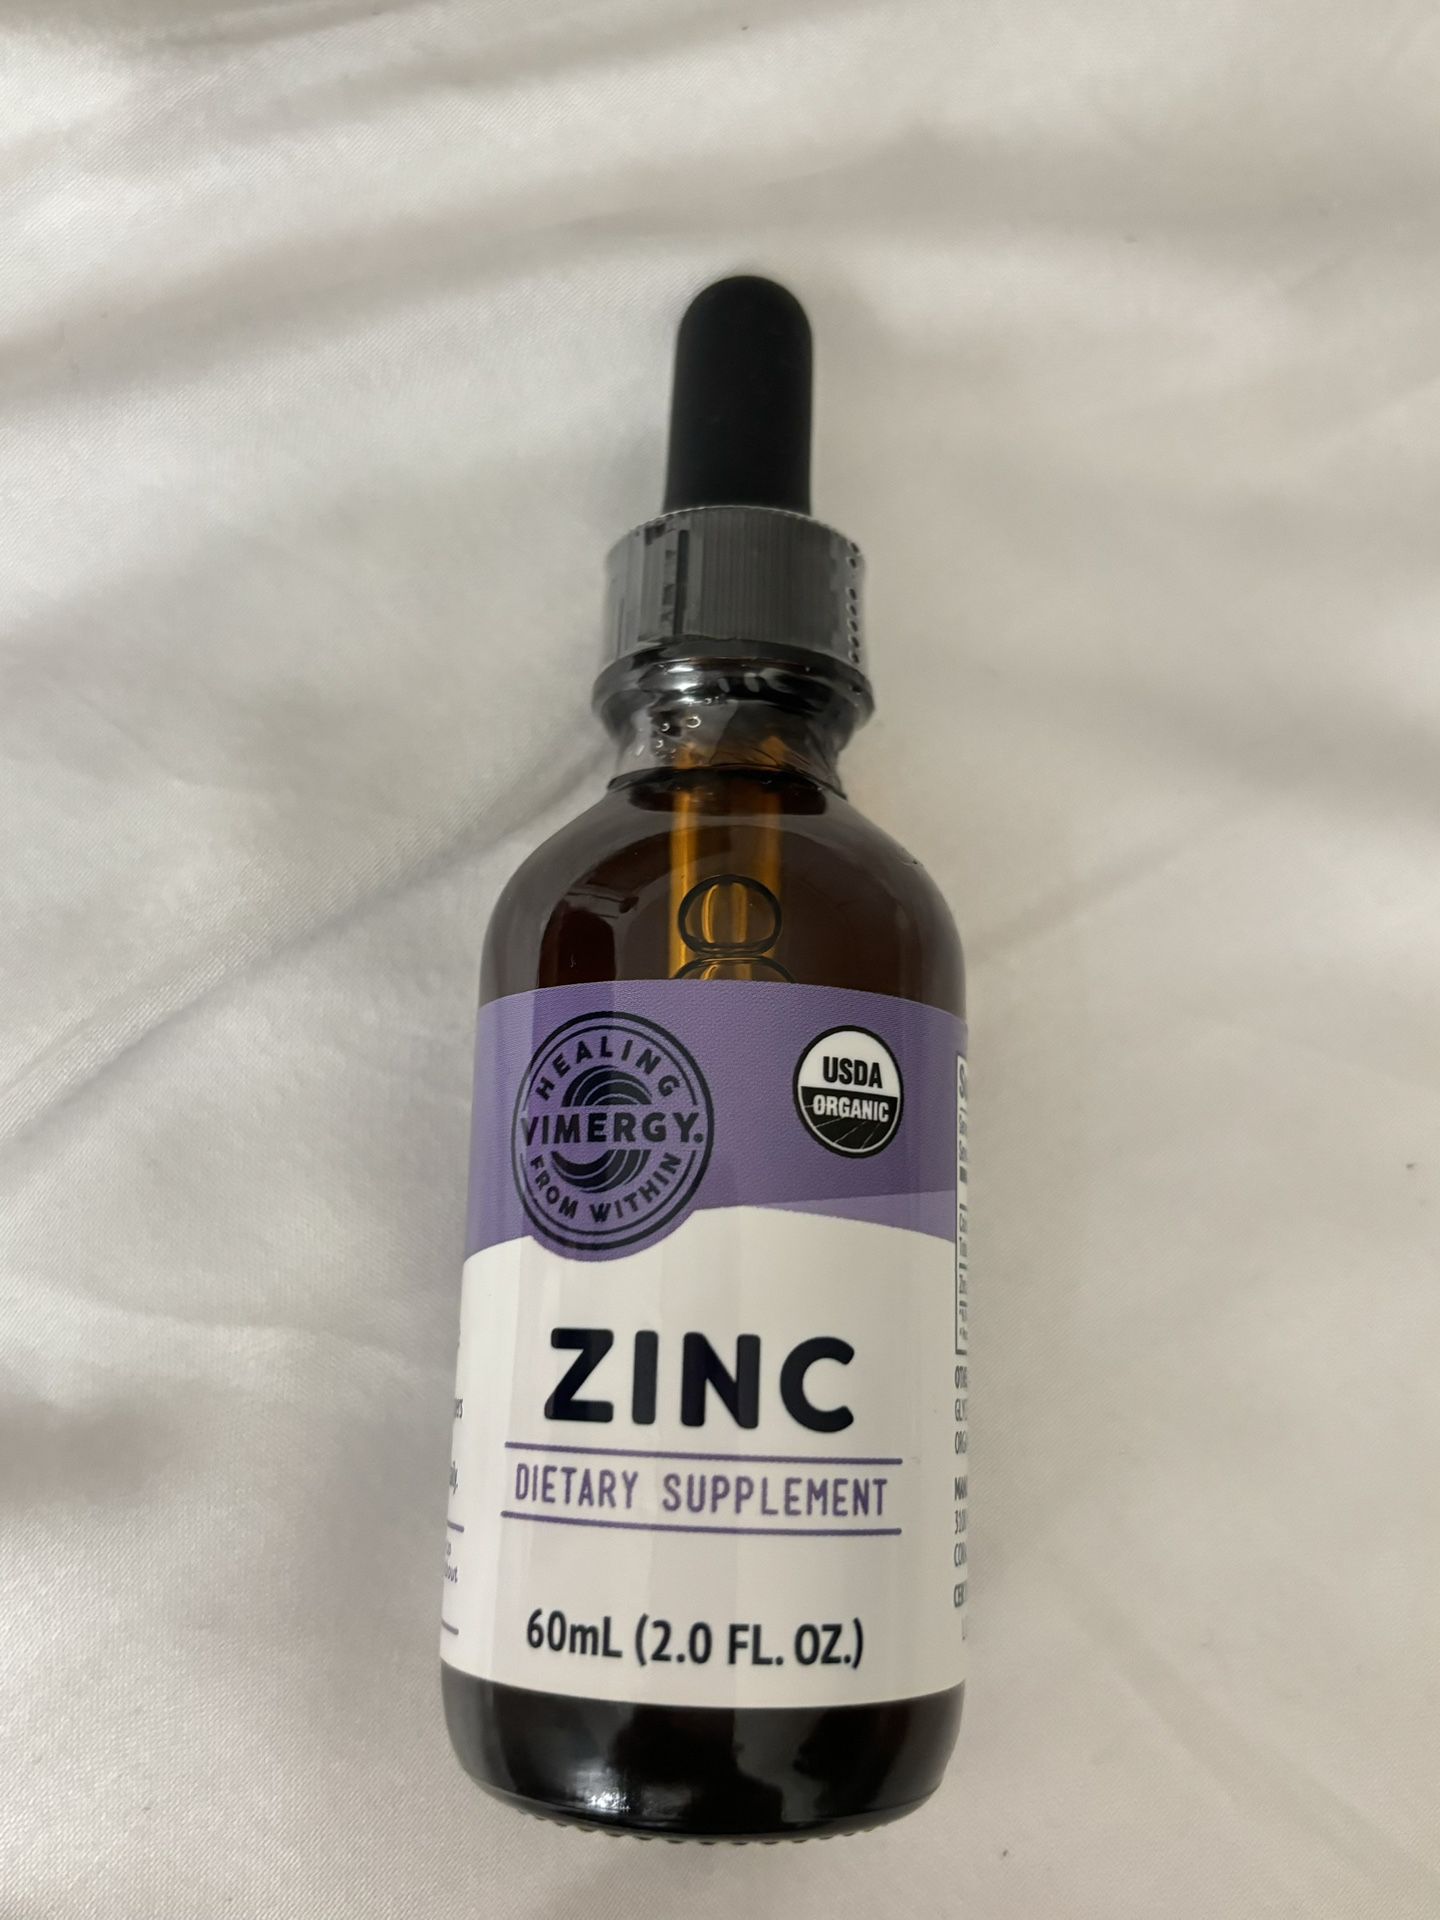 Vimergy organic liquid zinc